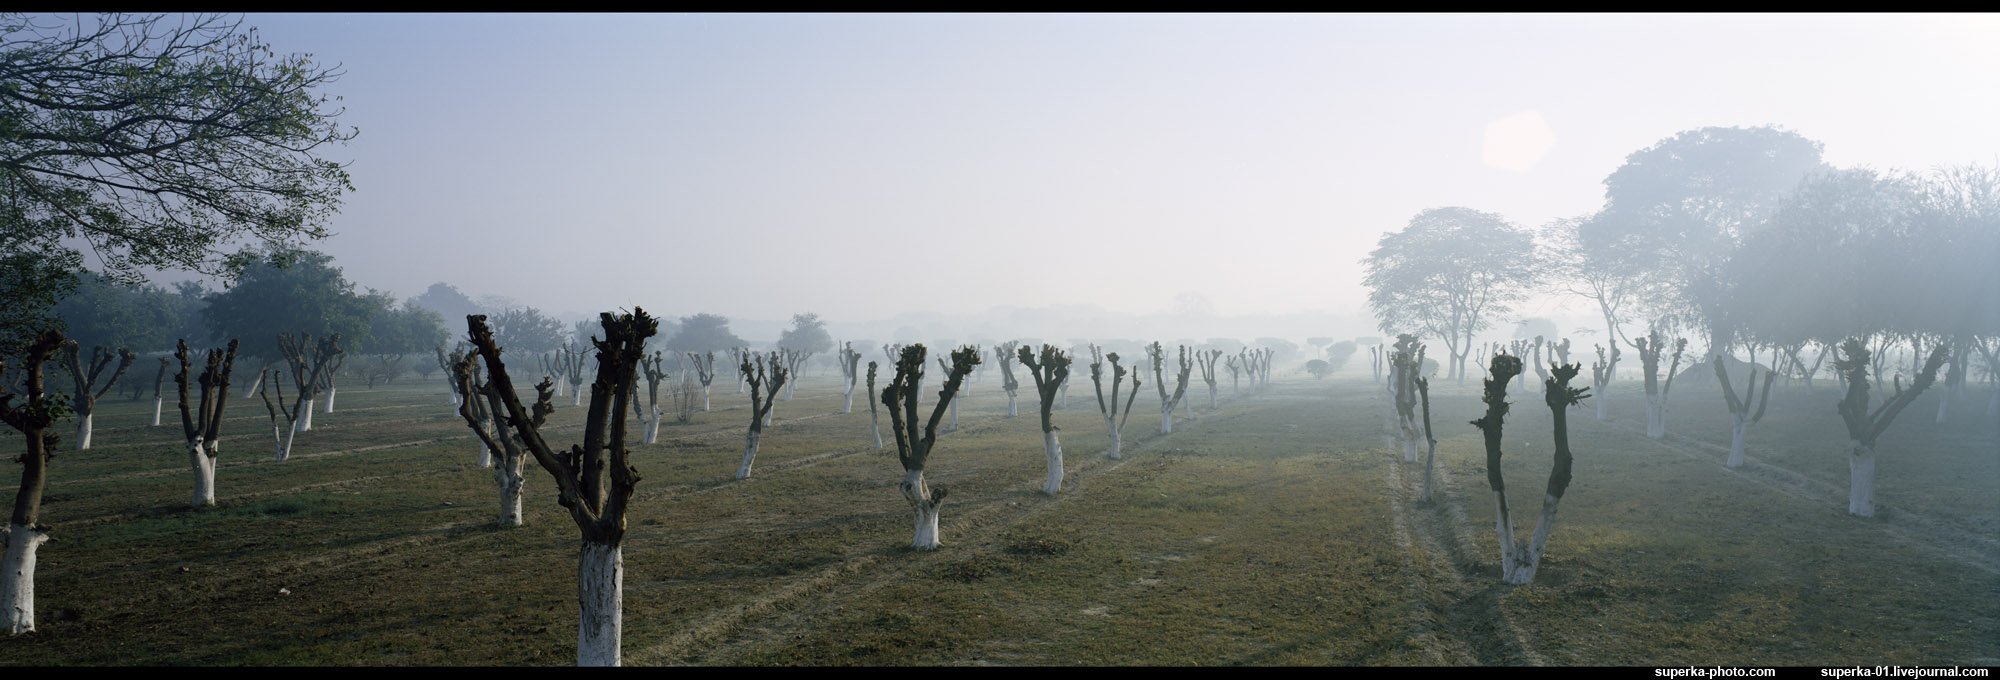 агра, индия, тадж-махал, рассвет, туман, деревья, панорама, Павел Супрун